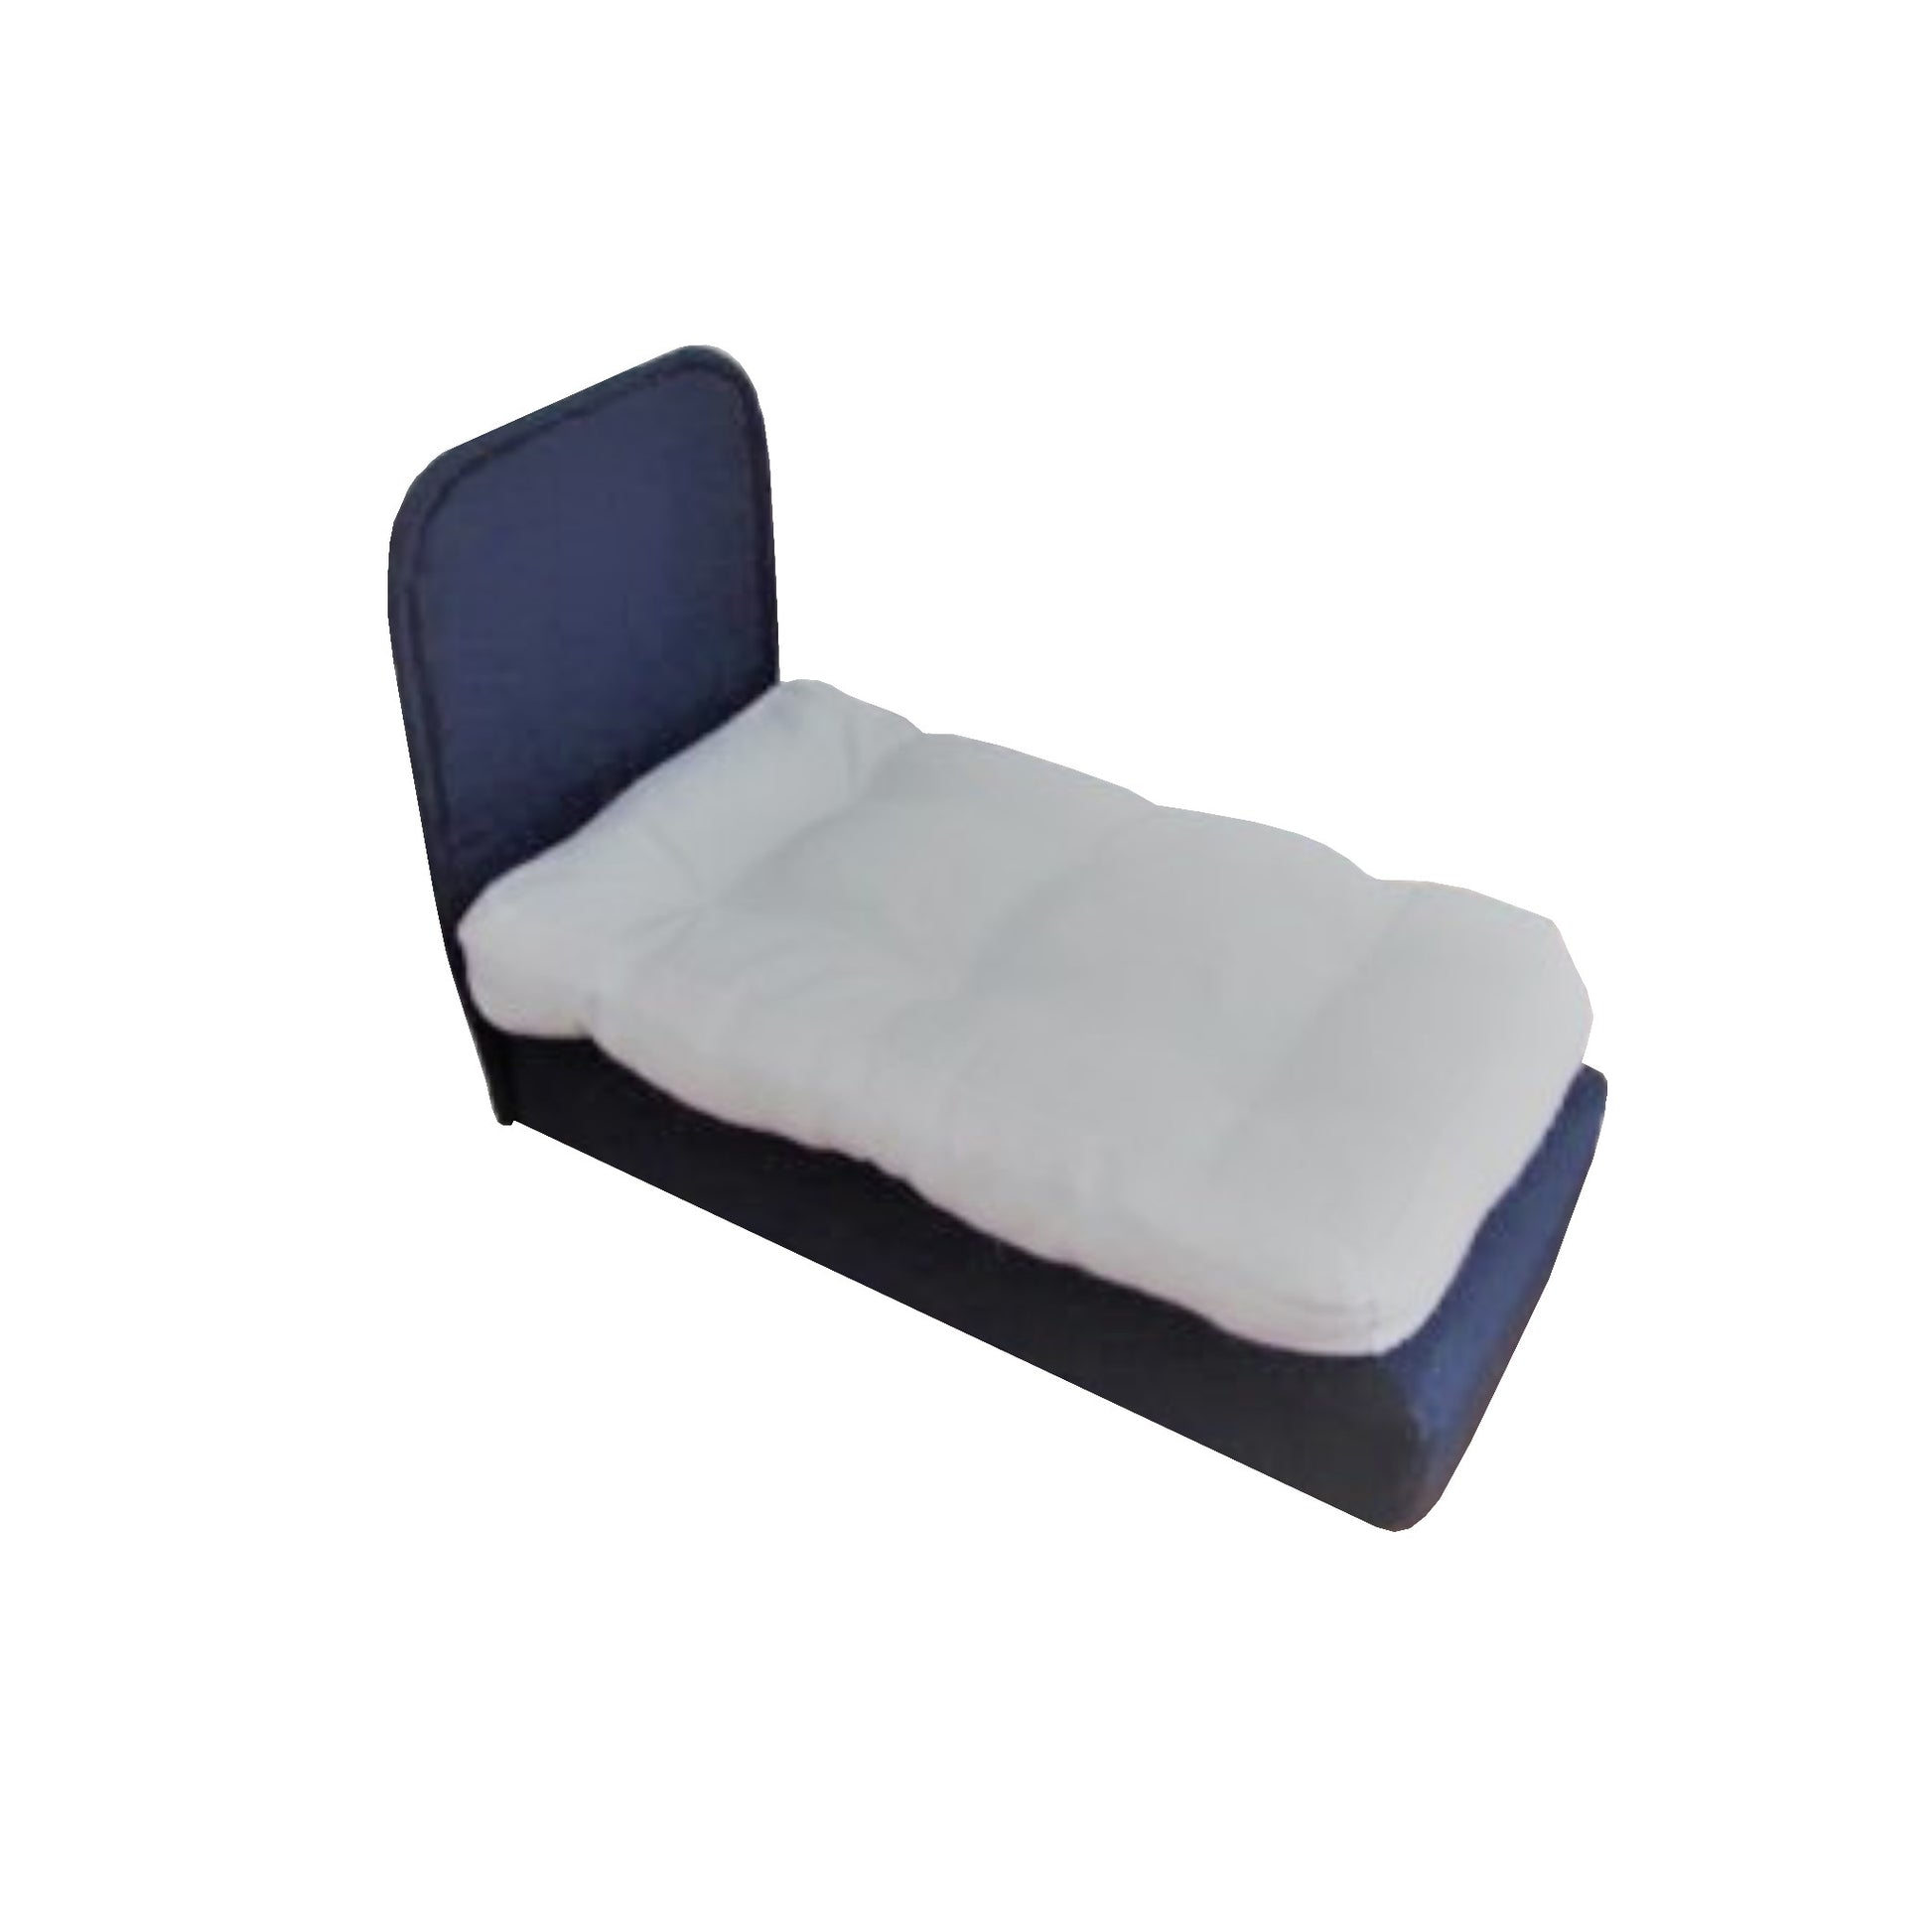 Upholstered Dark Blue Doll Bed for 6.5-inch dolls